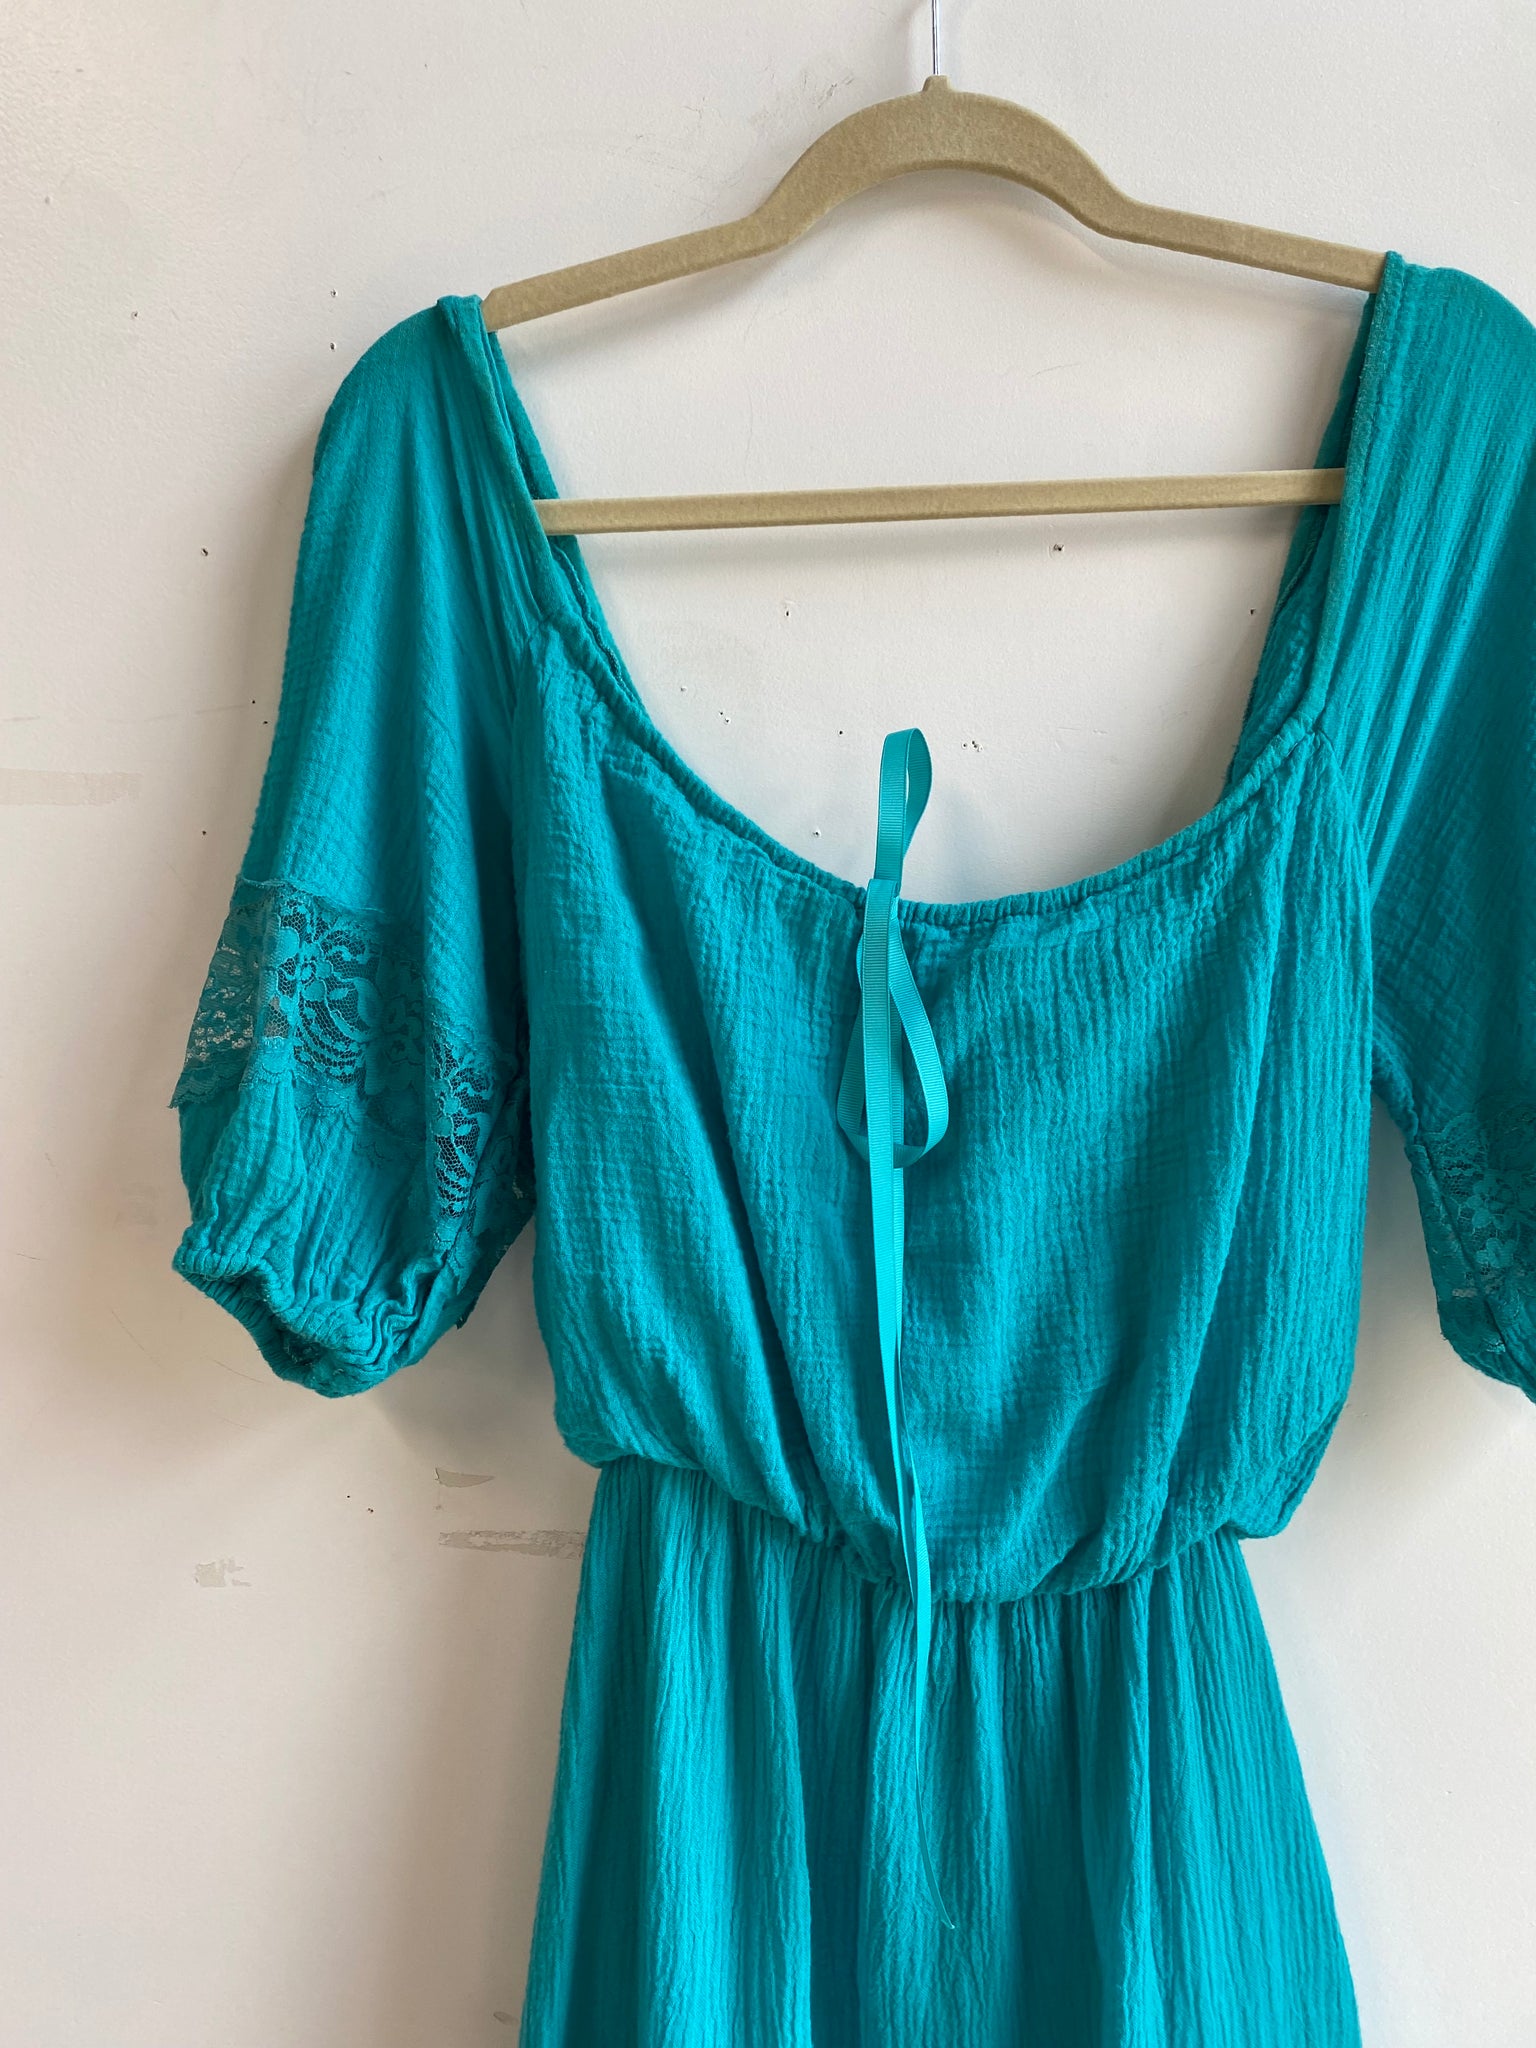 Turquoise Gauzy Cotton Dress